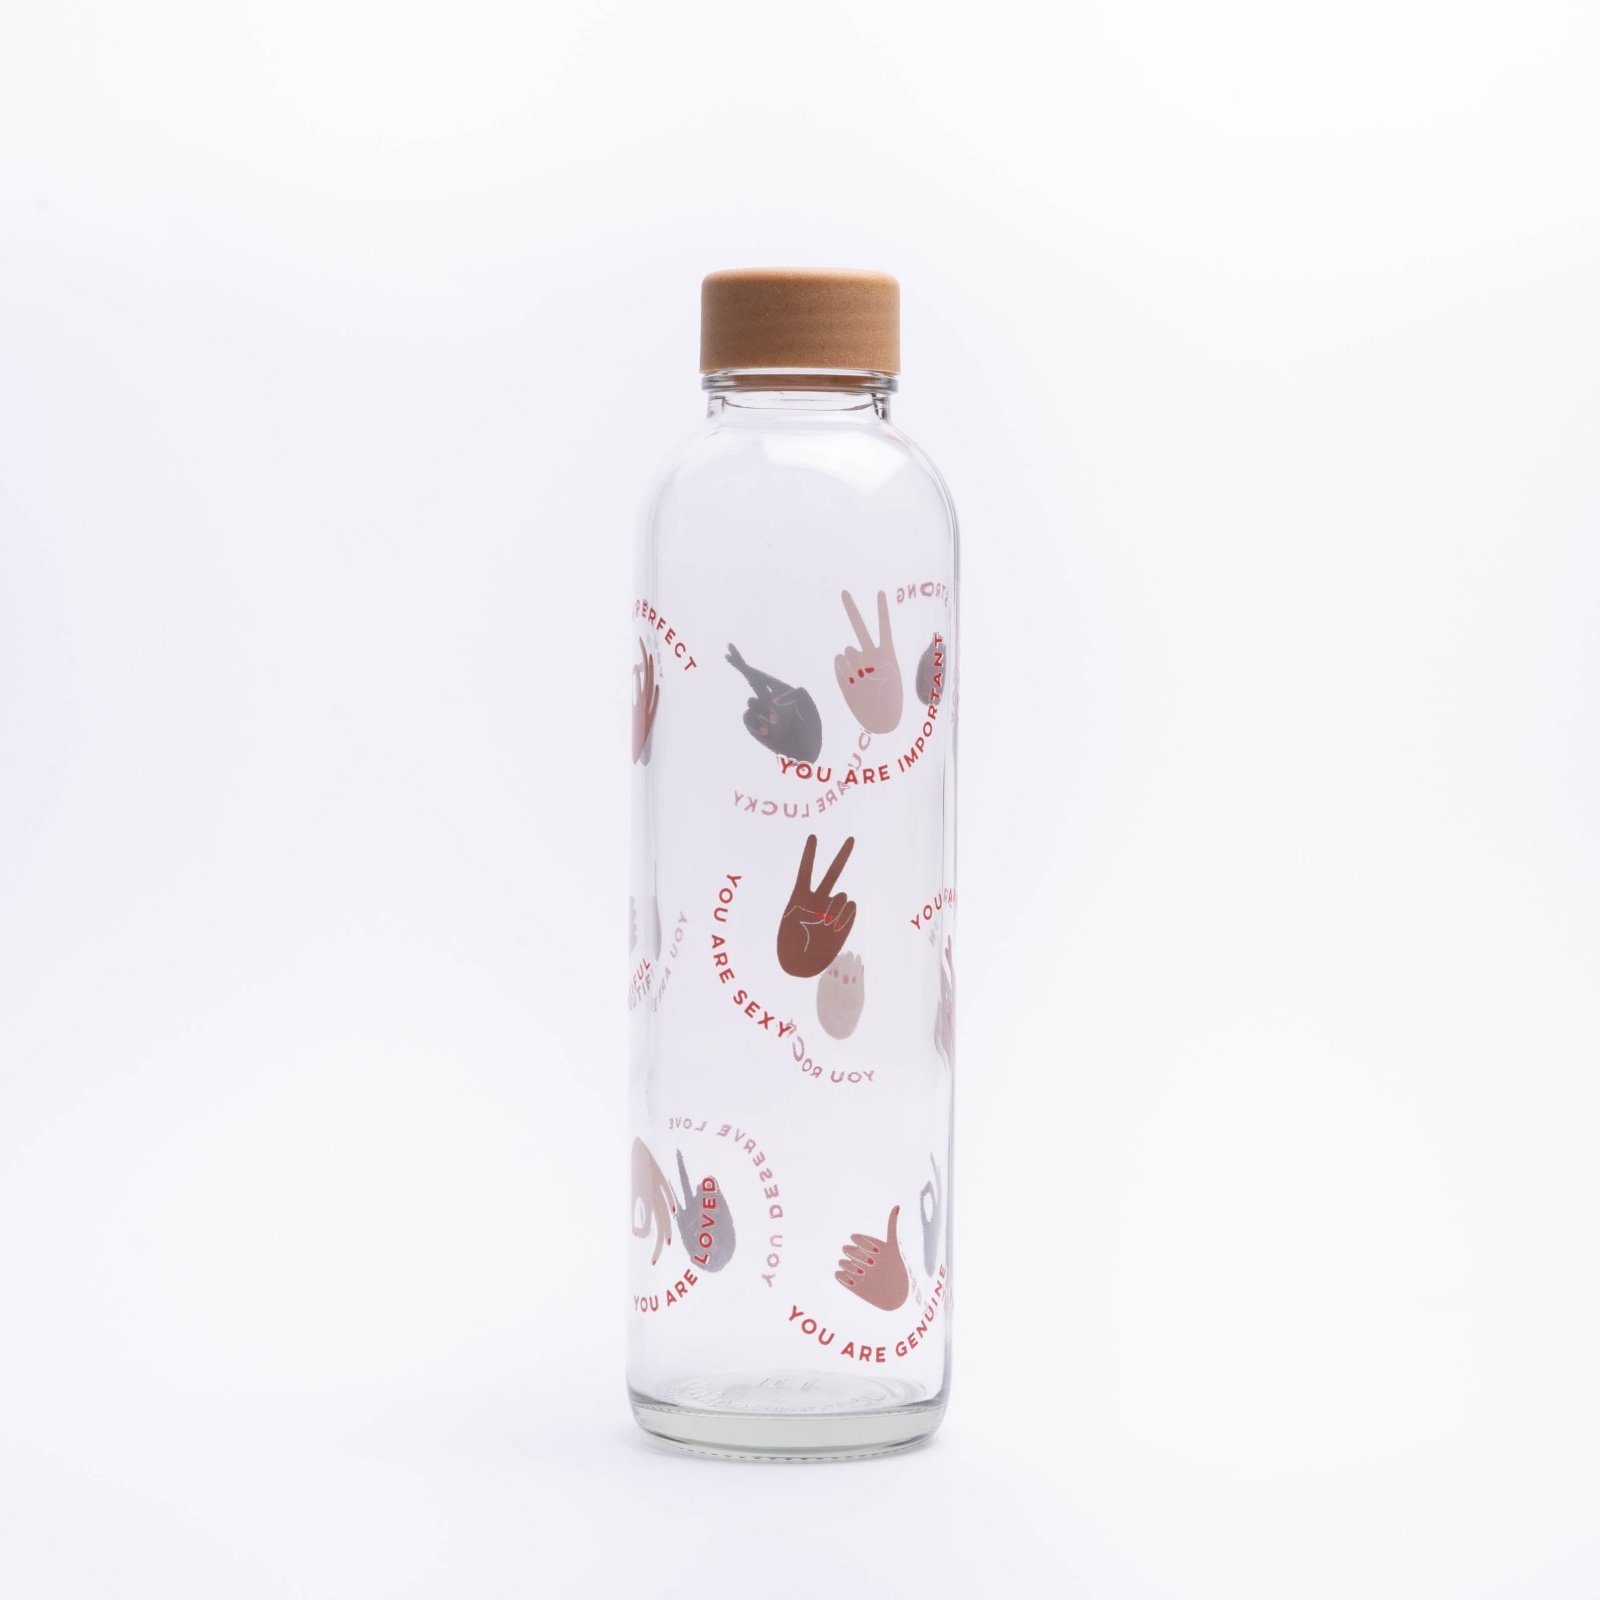 UP Trinkflasche 0.7 CARRY l GLAS, Regional yogabox produziert POWER